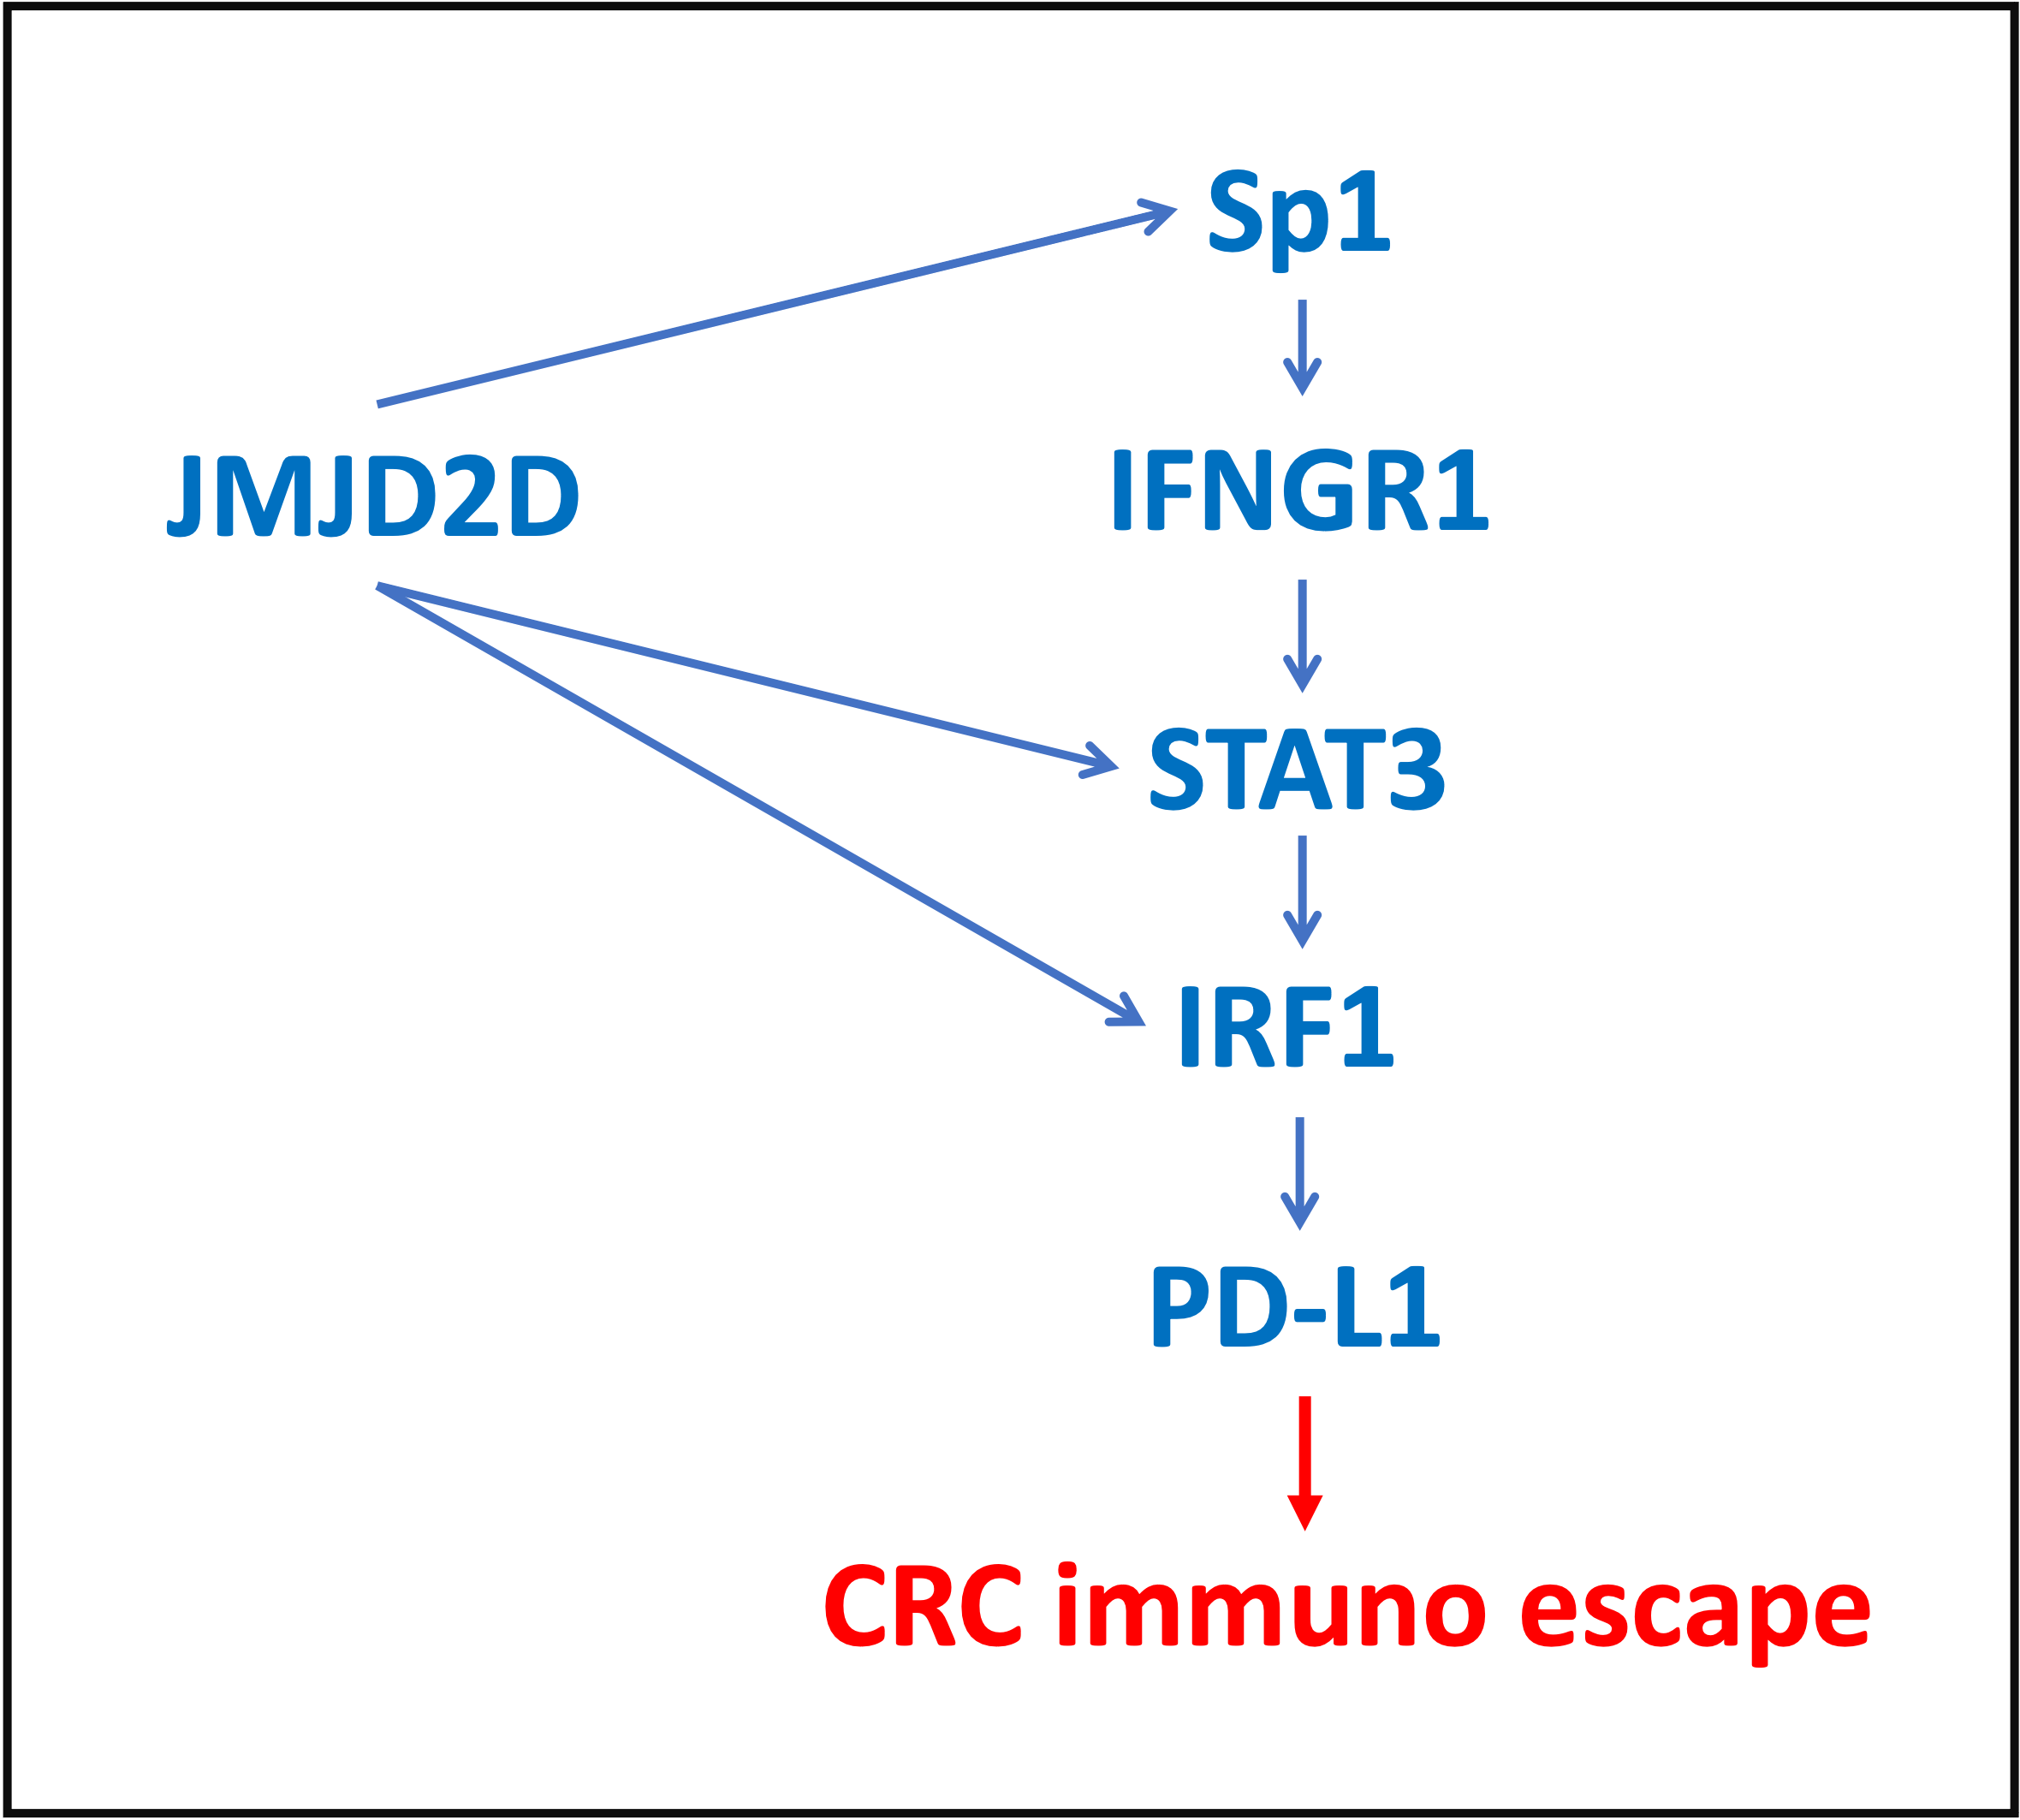 Sp1, STAT3, IRF1 in colorectal cancer